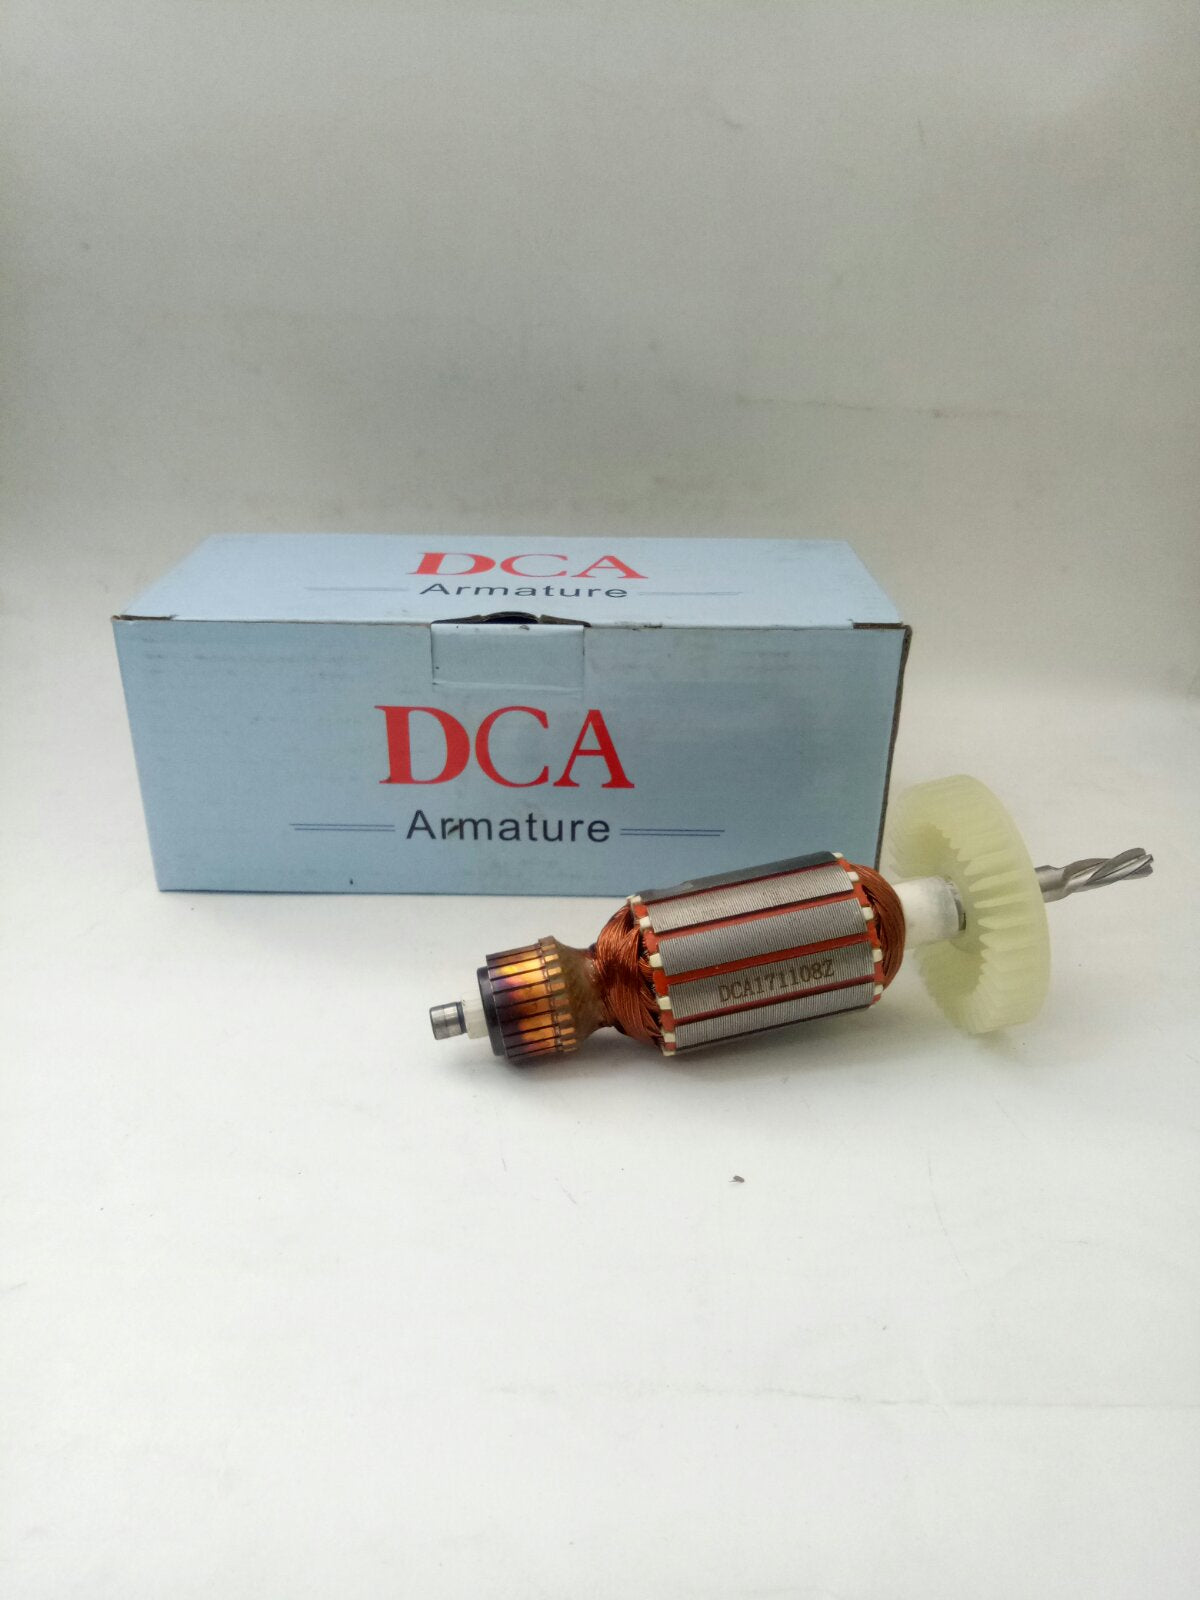 DCA Armature for AZJ16 Electric Impact Drill